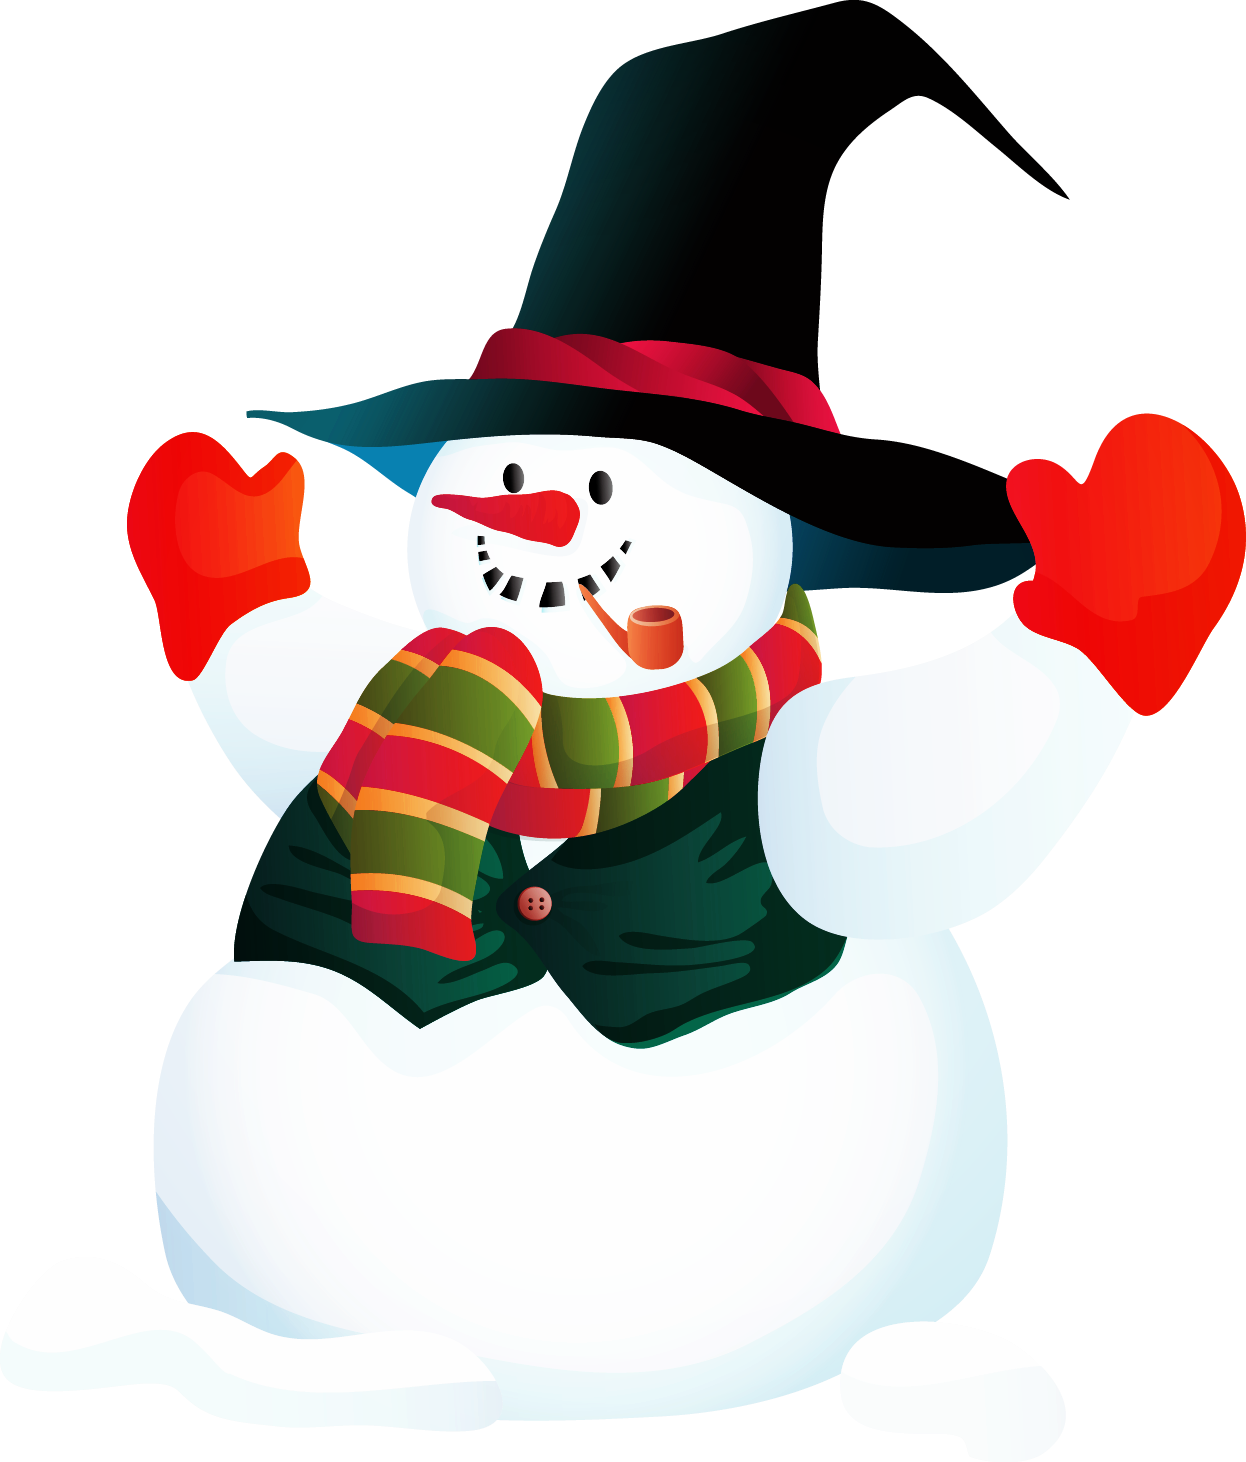 Snowman Animation Clip Art - Snowman Animation Clip Art.